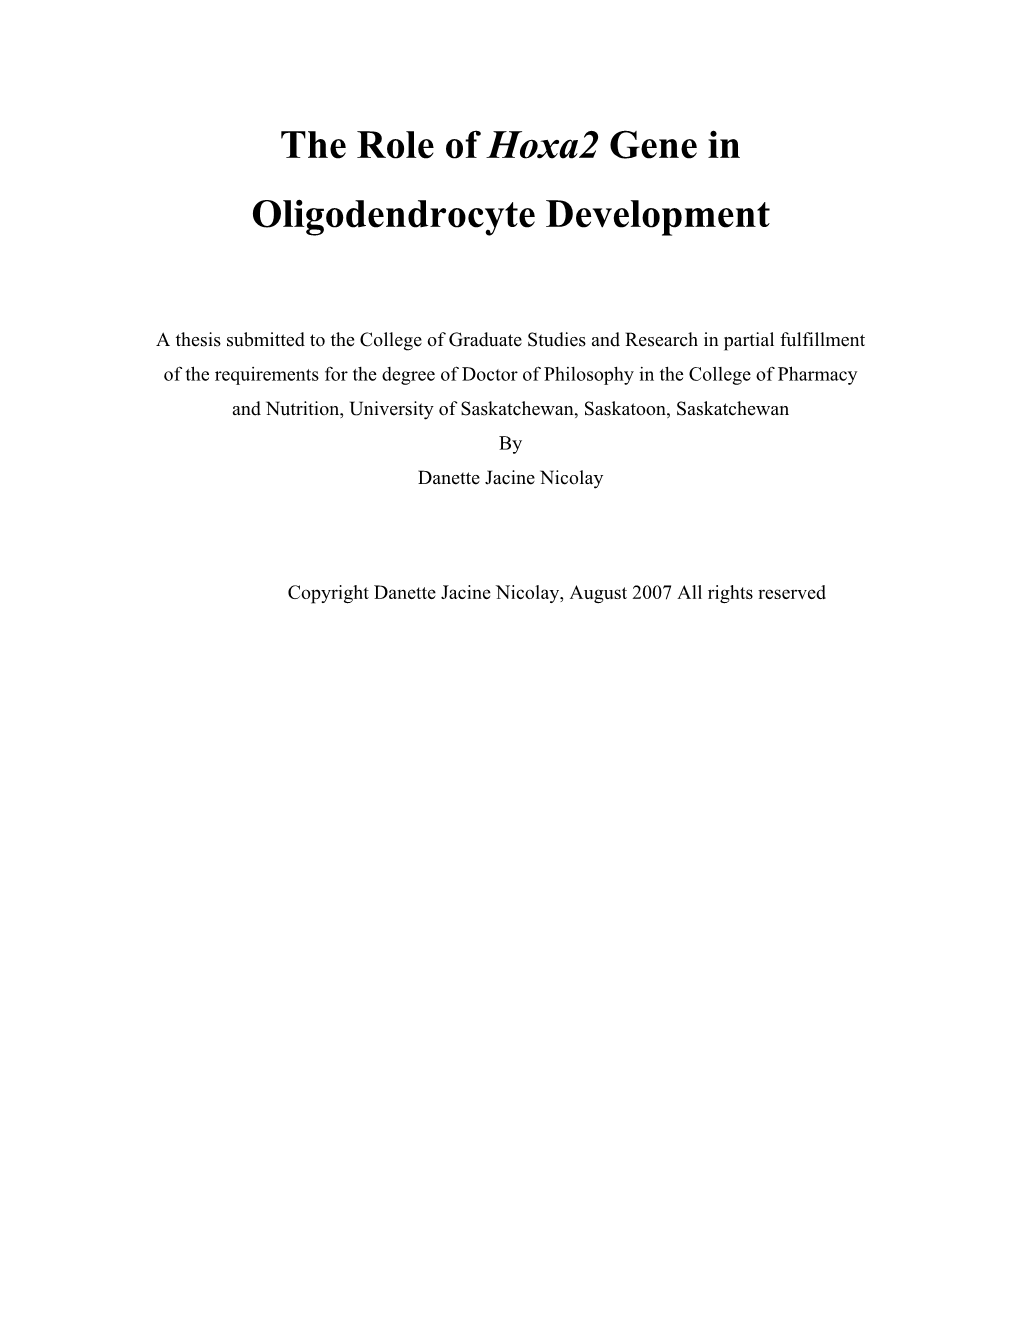 The Role of Hoxa2 Gene in Oligodendrocyte Development